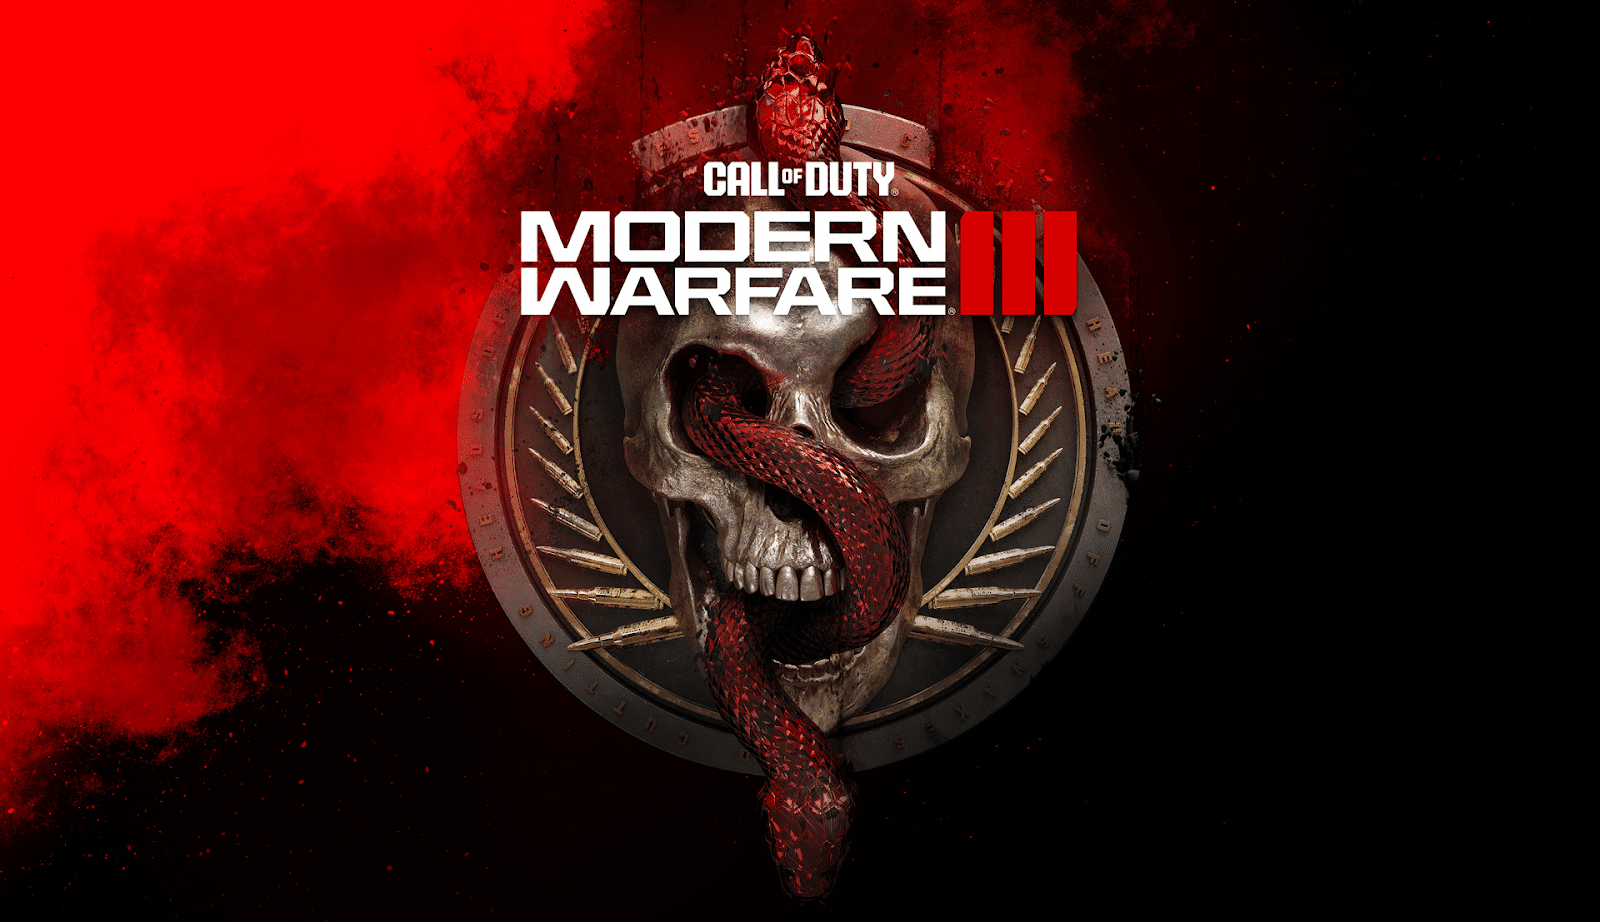 Modern Warfare 3 Different Editions